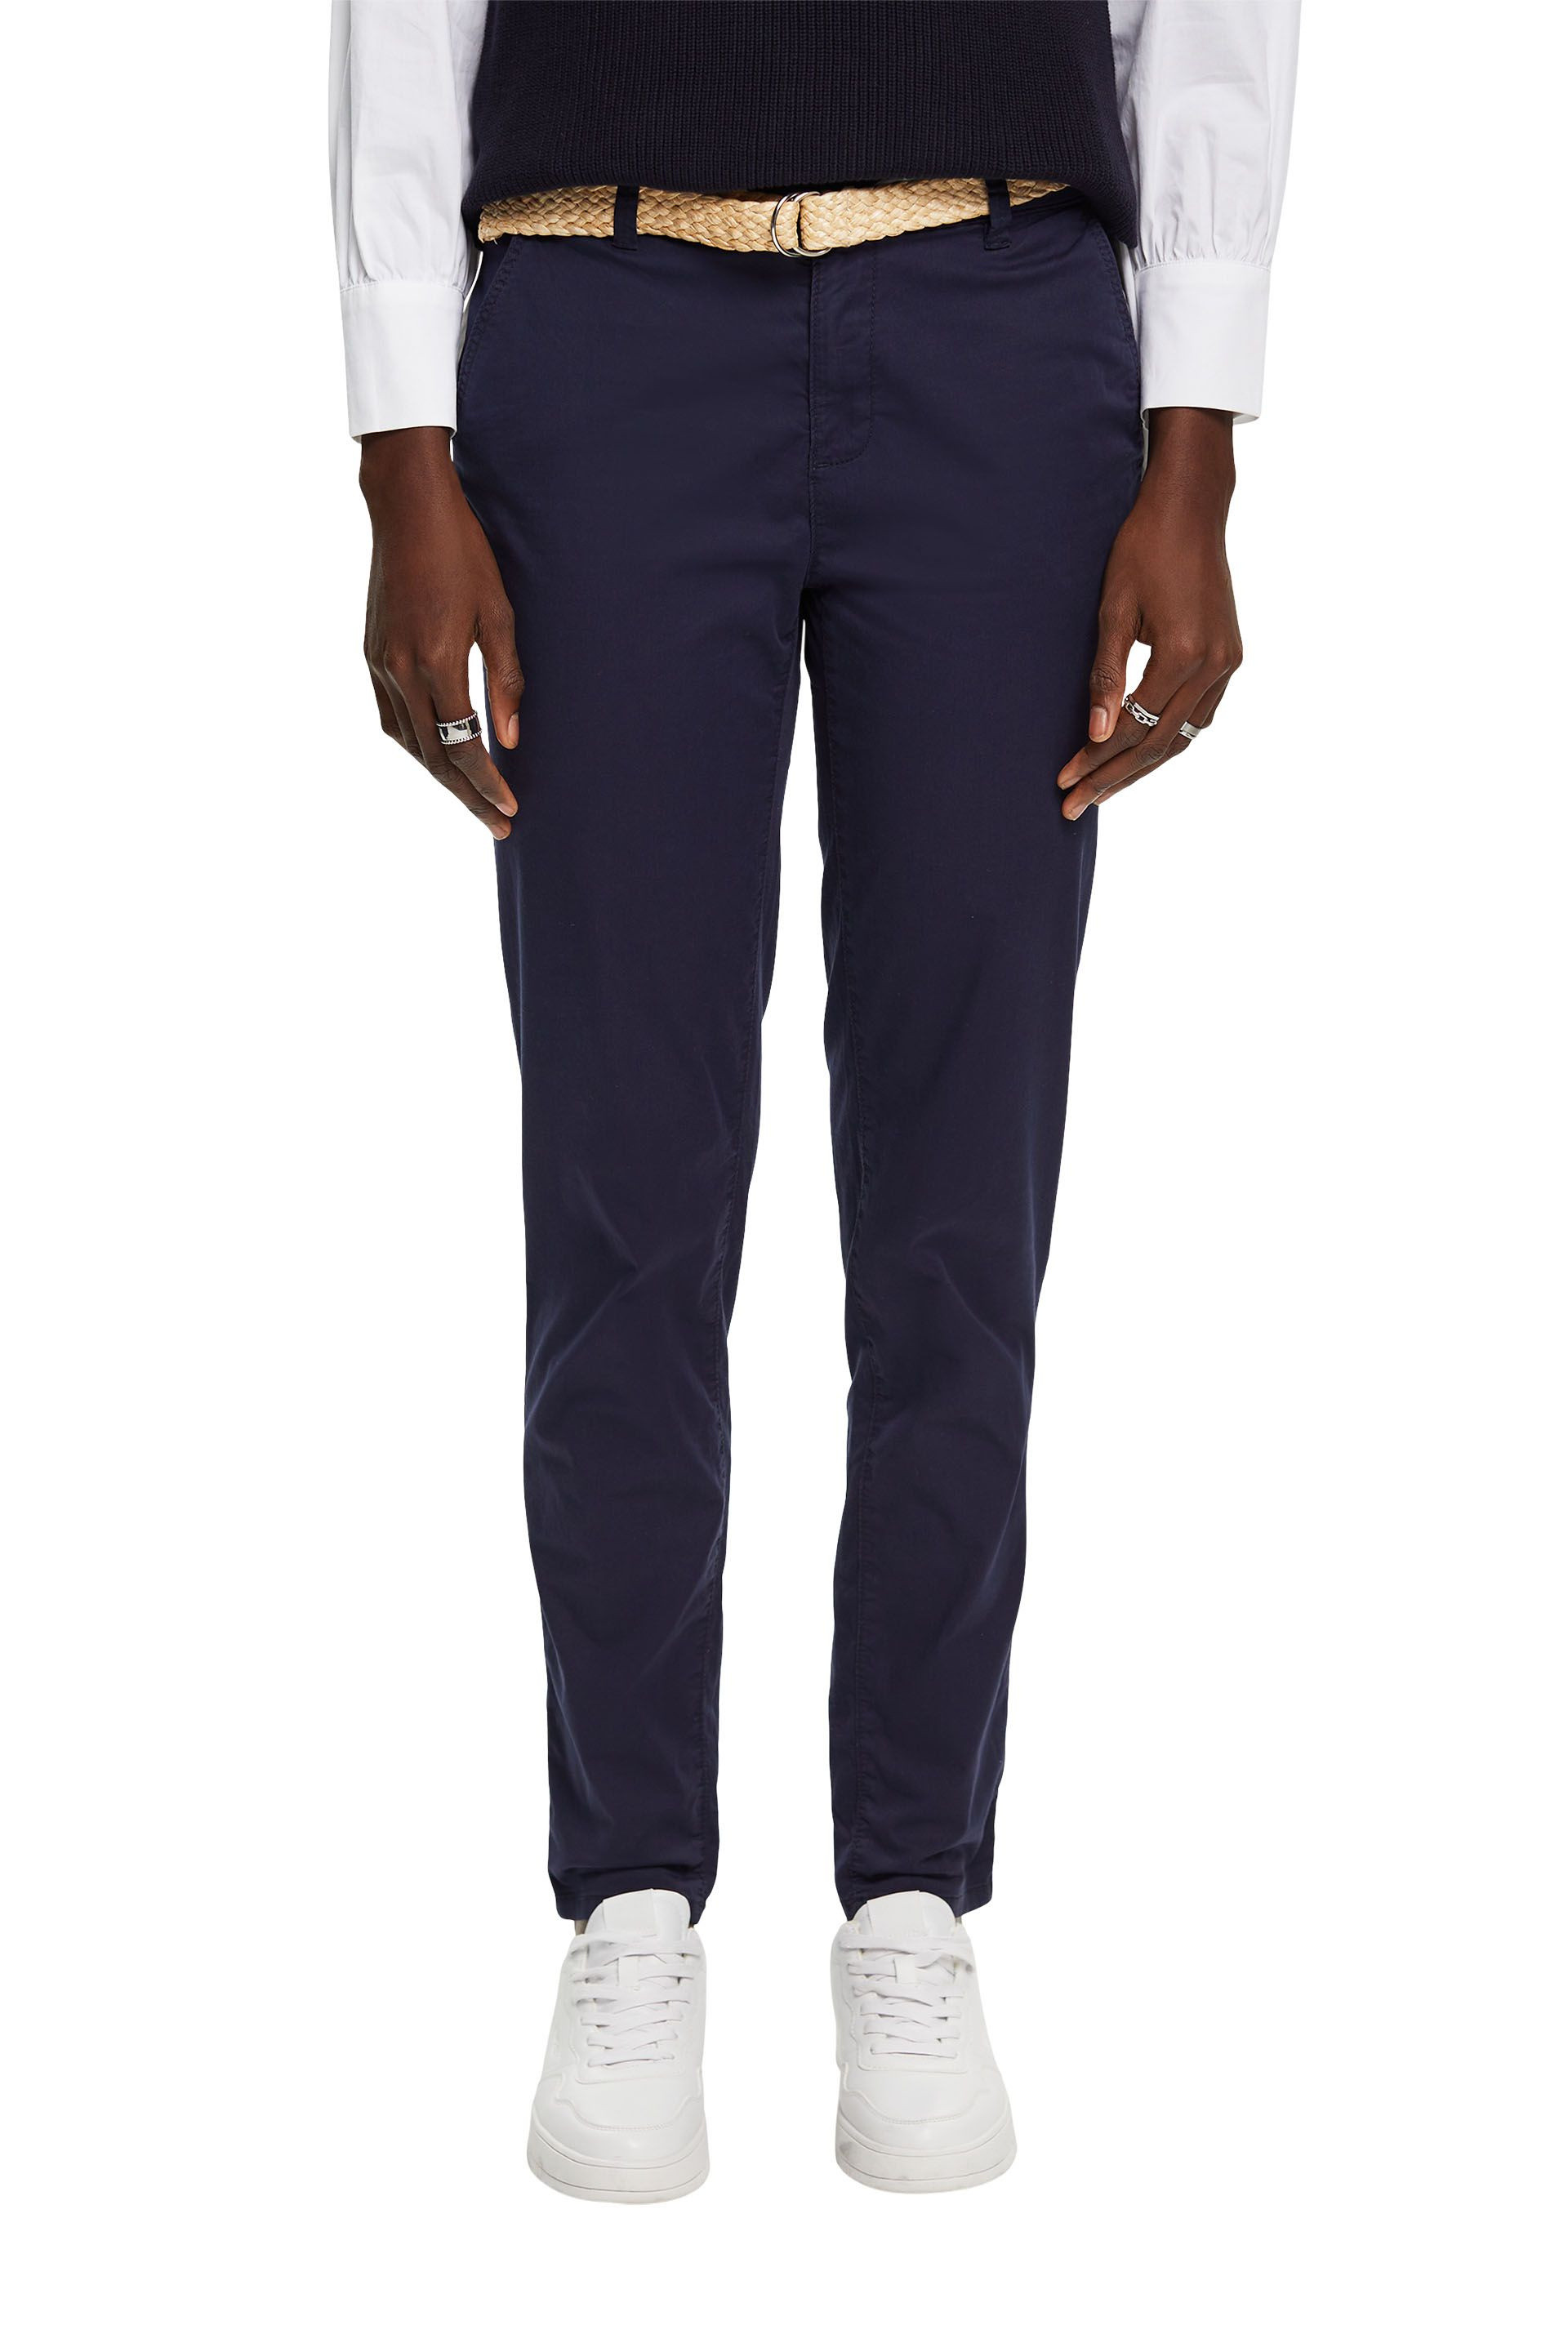 Esprit - Pantaloni chino cropped con cintura, Blu scuro, large image number 1